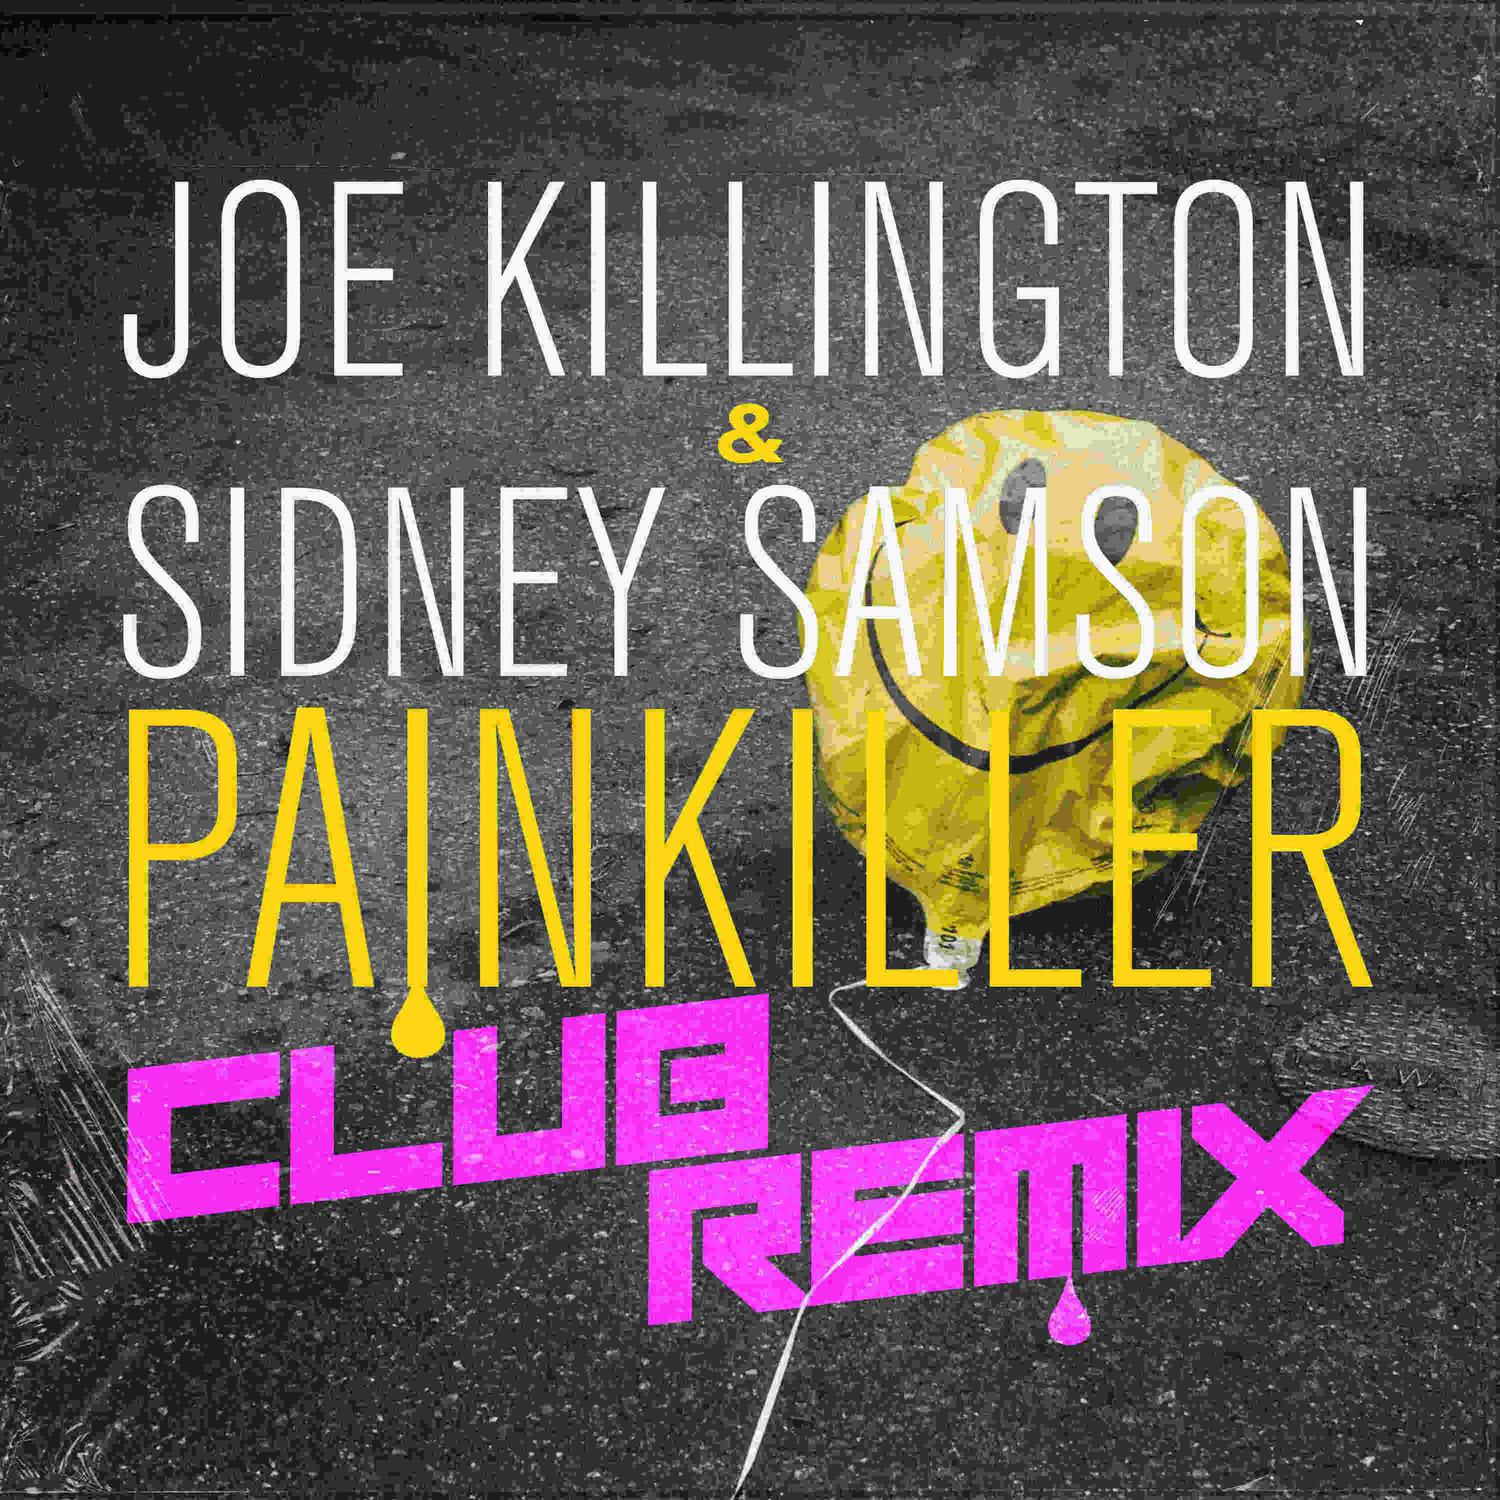 Joe Killington - Painkiller (Sidney Samson Club Remix Extended)